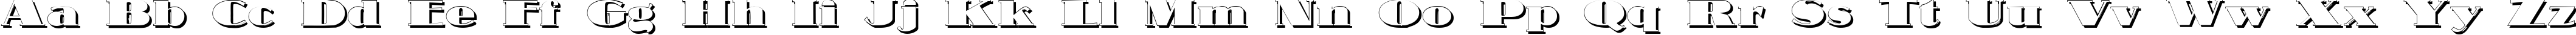 Пример написания английского алфавита шрифтом Nubian Shadow